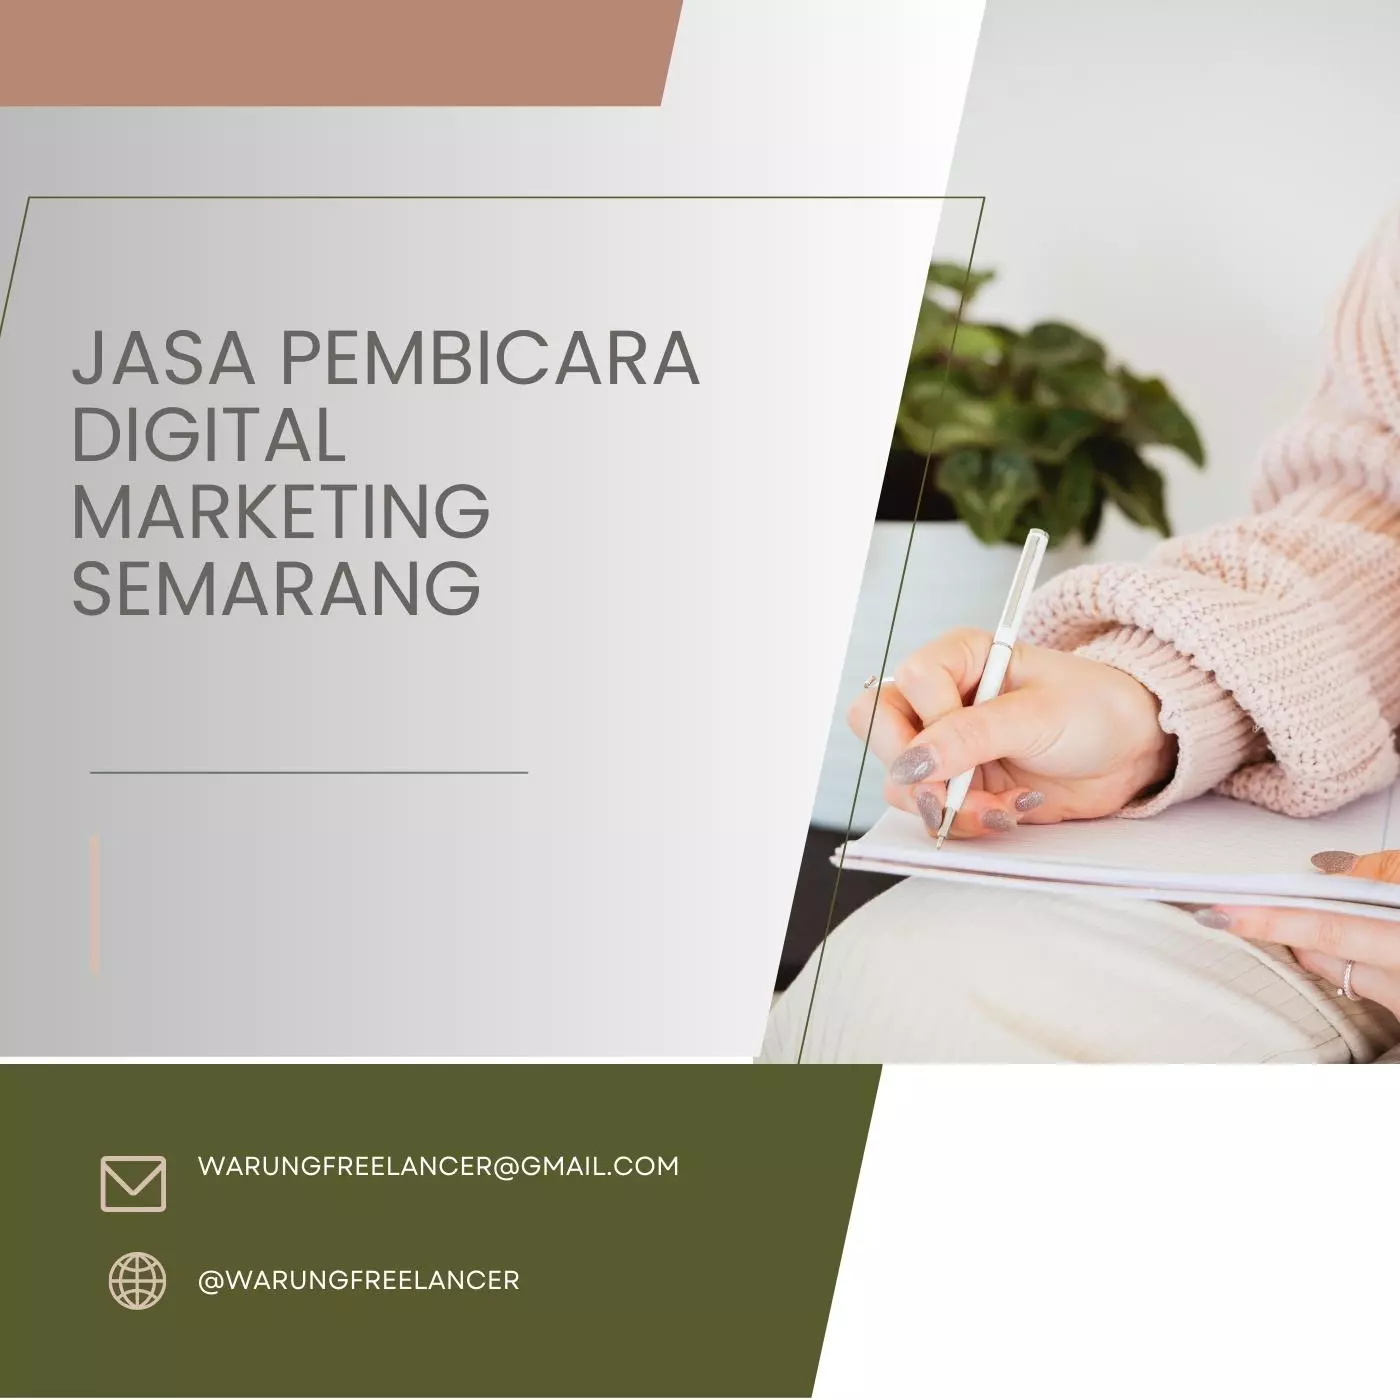 Jasa Pembicara Digital Marketing Semarang